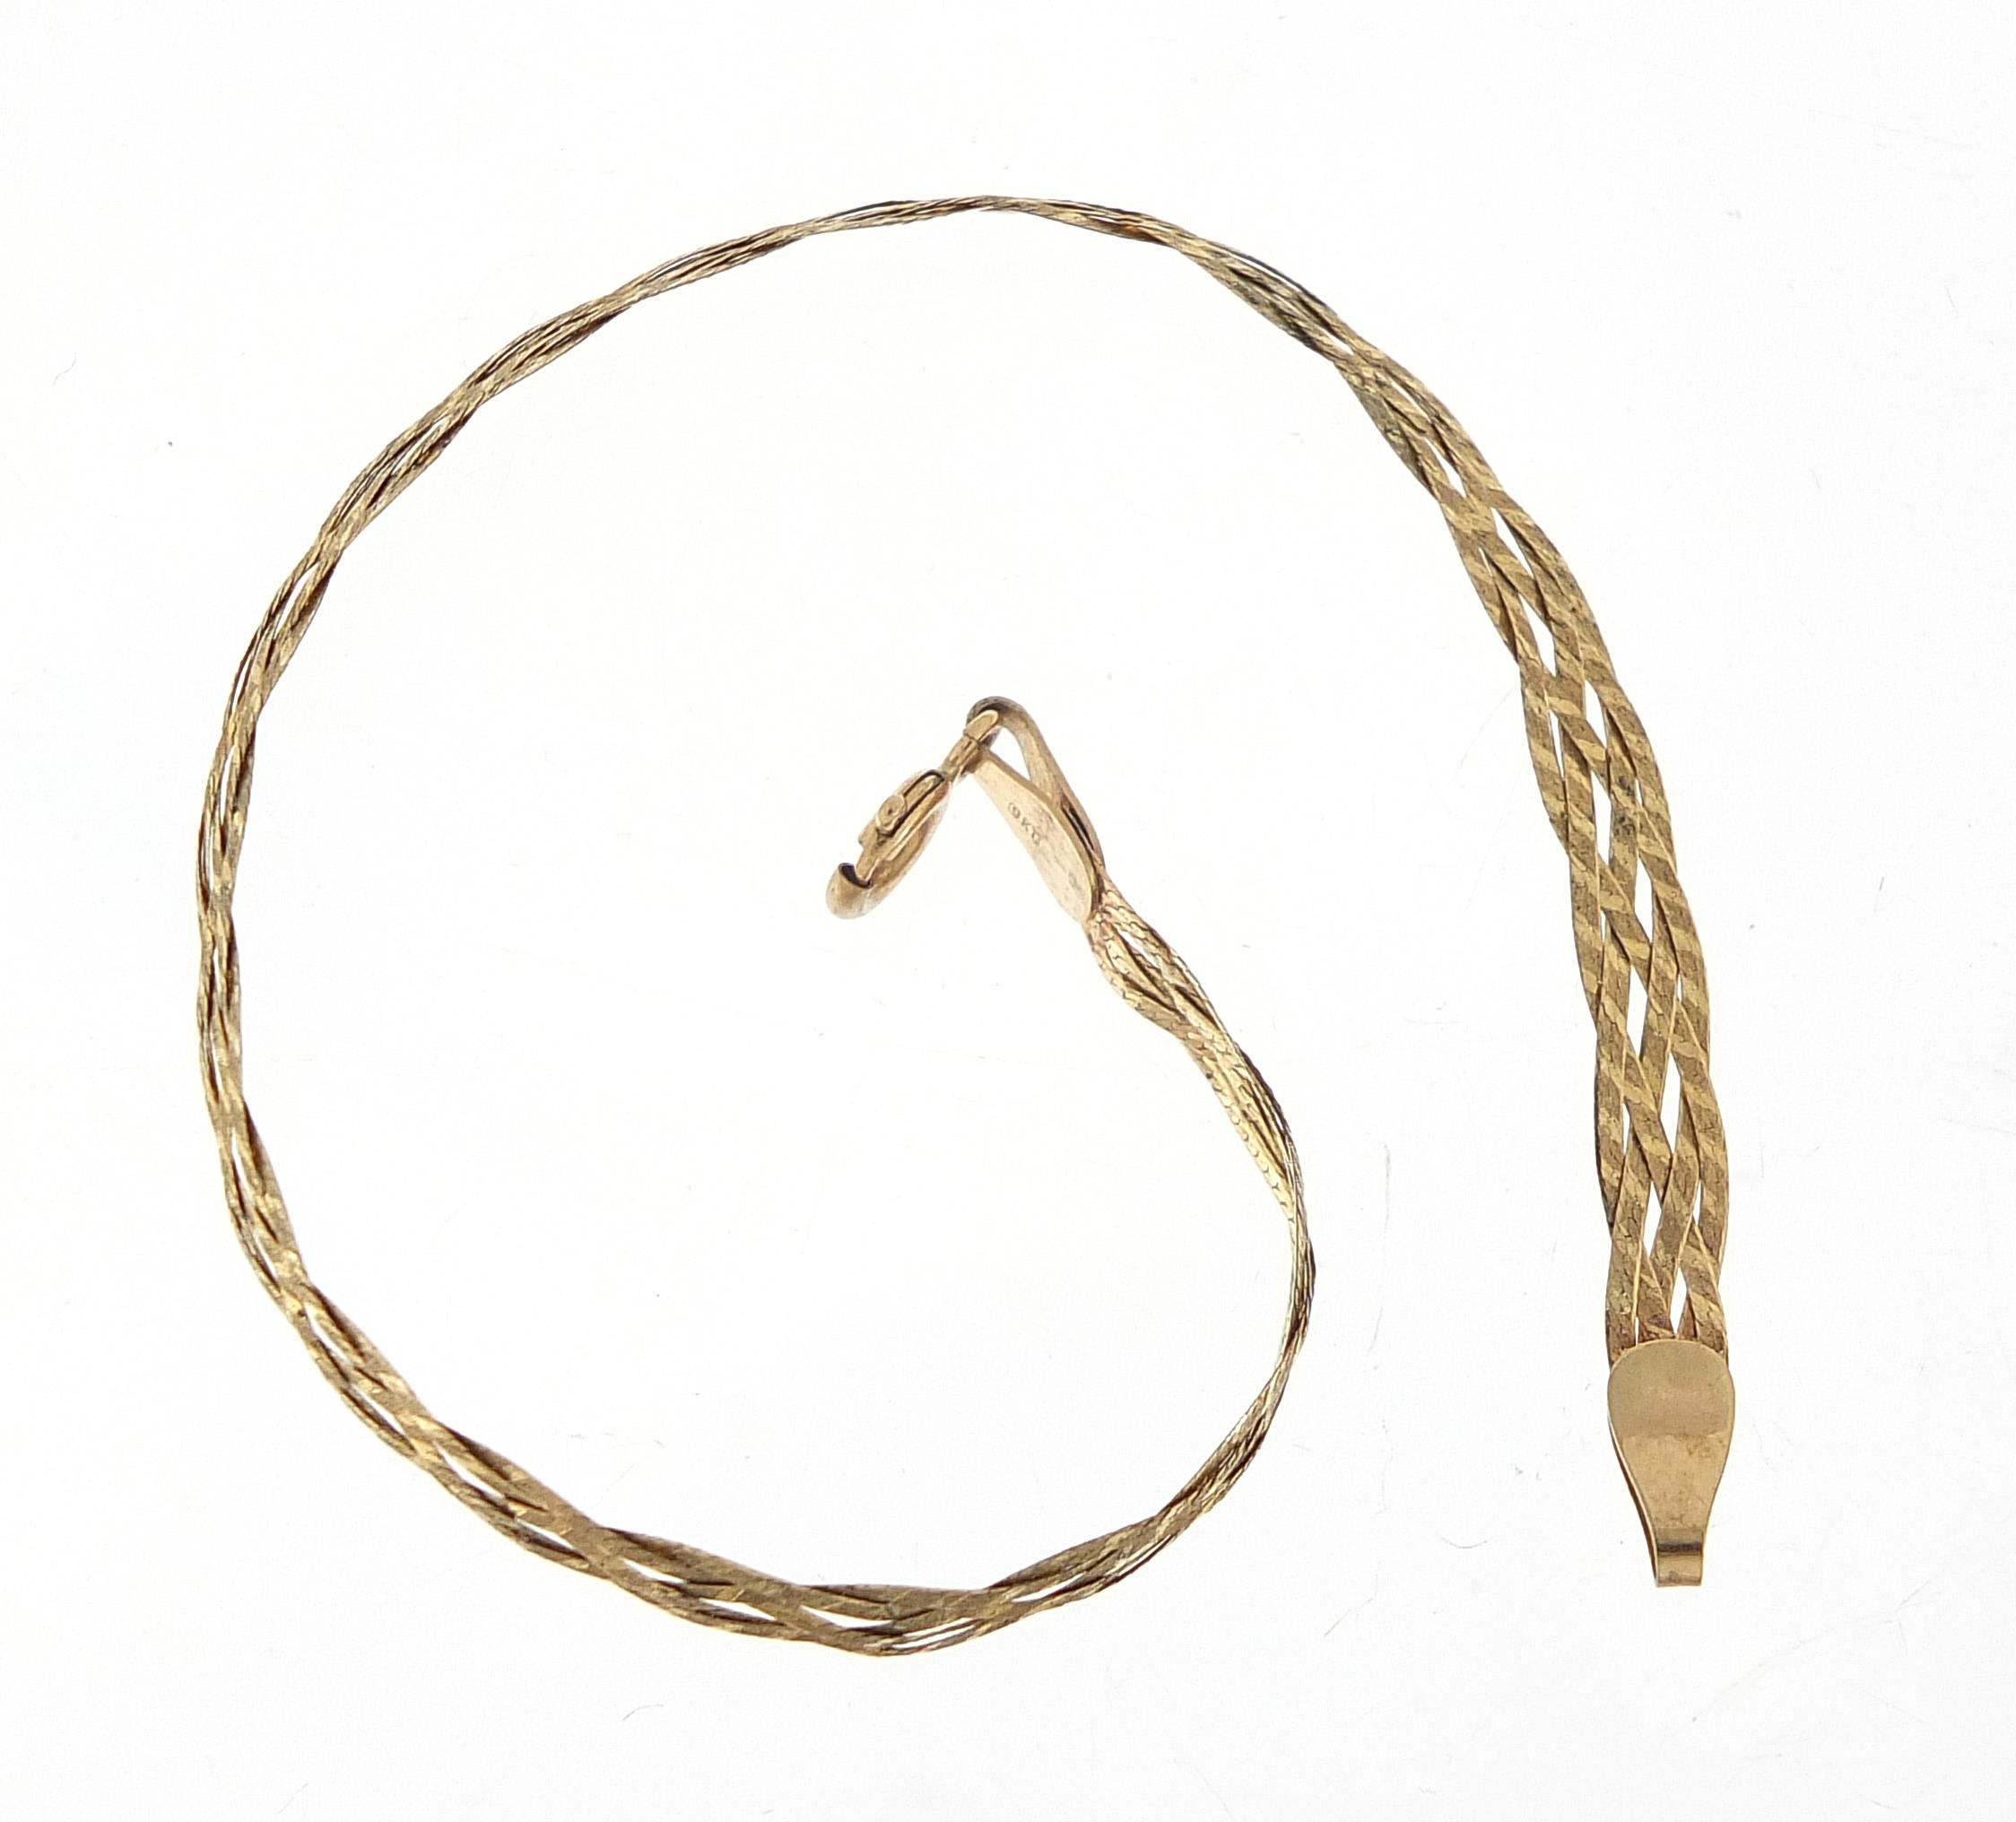 9ct gold flat weave bracelet, 17cm in length, 1.7g - Image 2 of 3